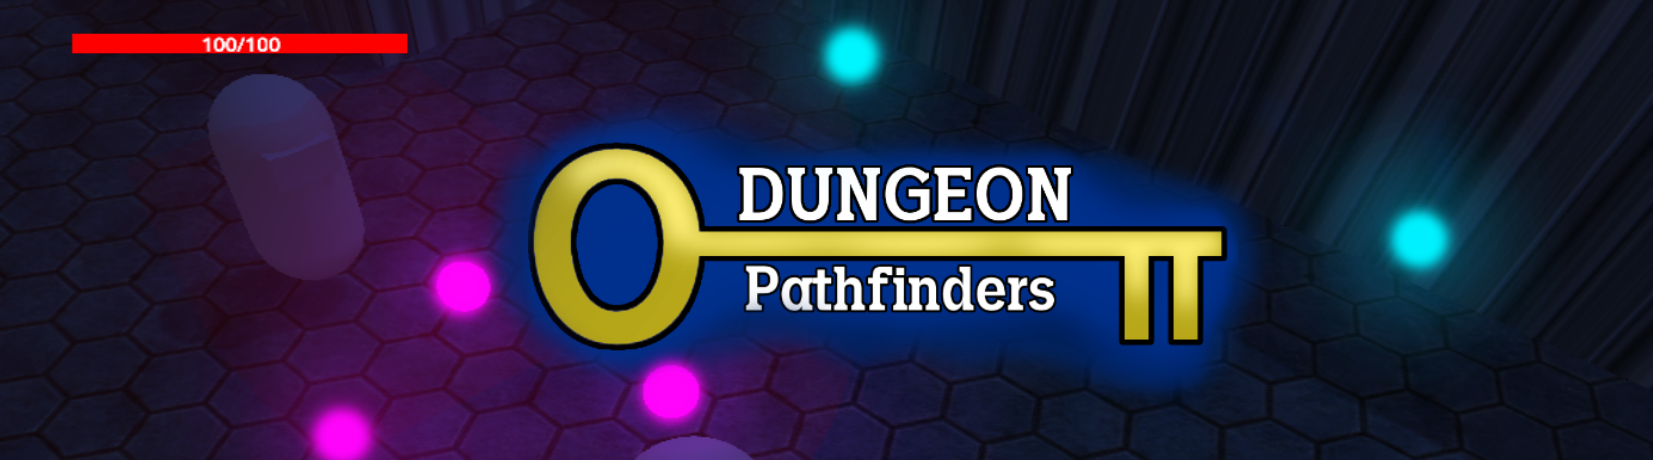 Dungeon Pathfinders